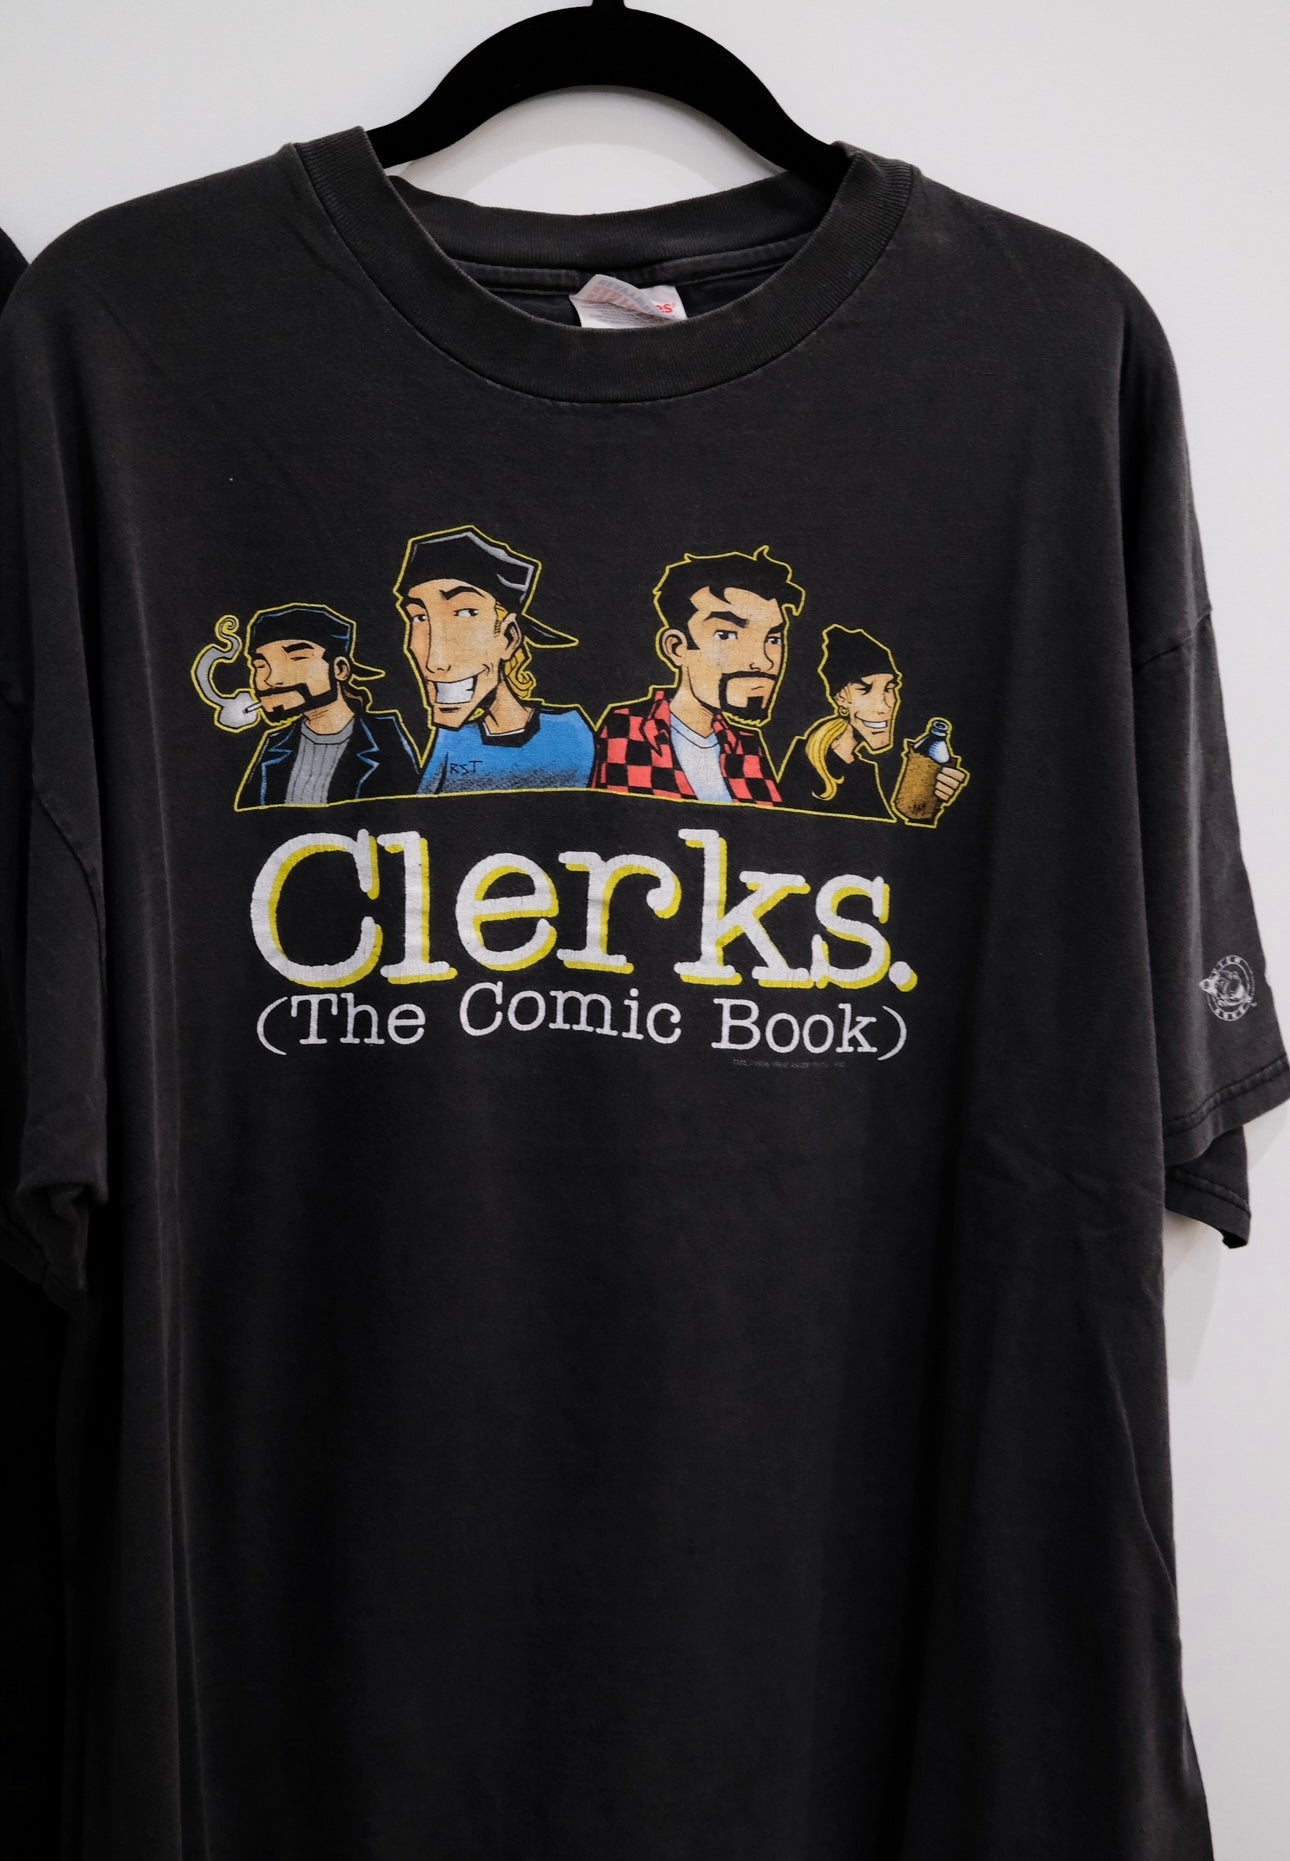 Clerks “The Comic Book” Promo Tee